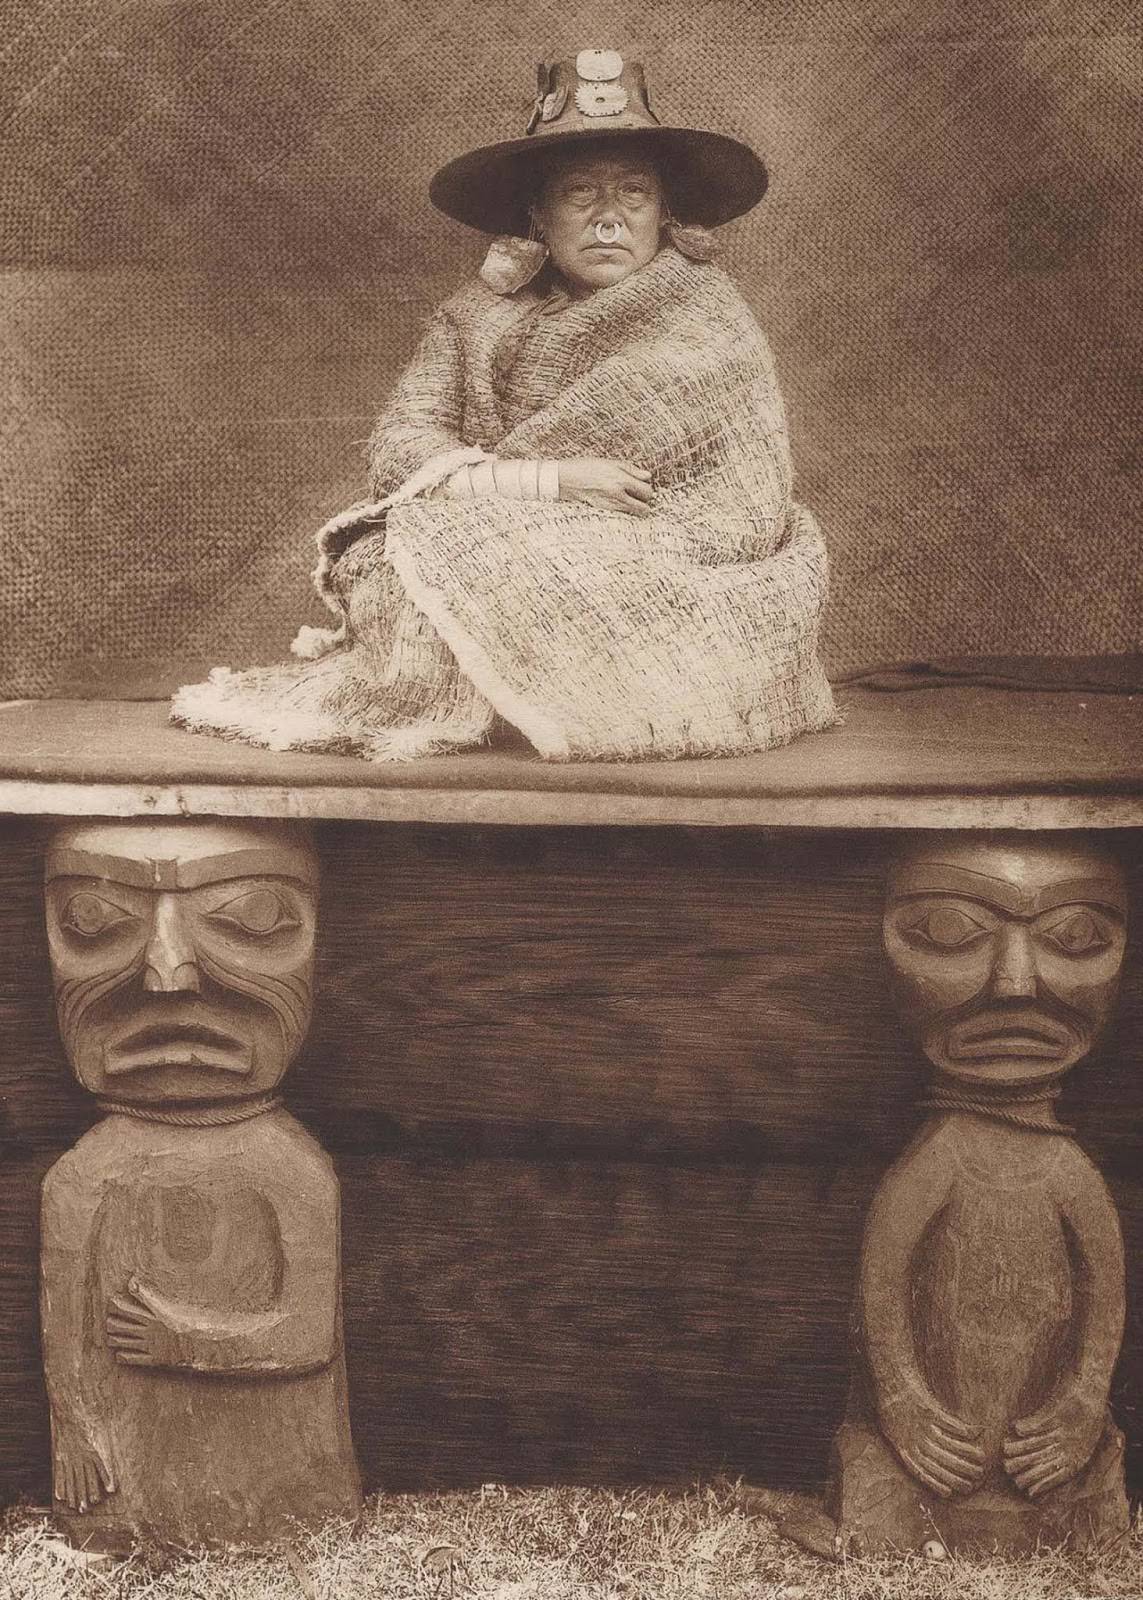 A Kwakiutl chief’s daughter. 1910.